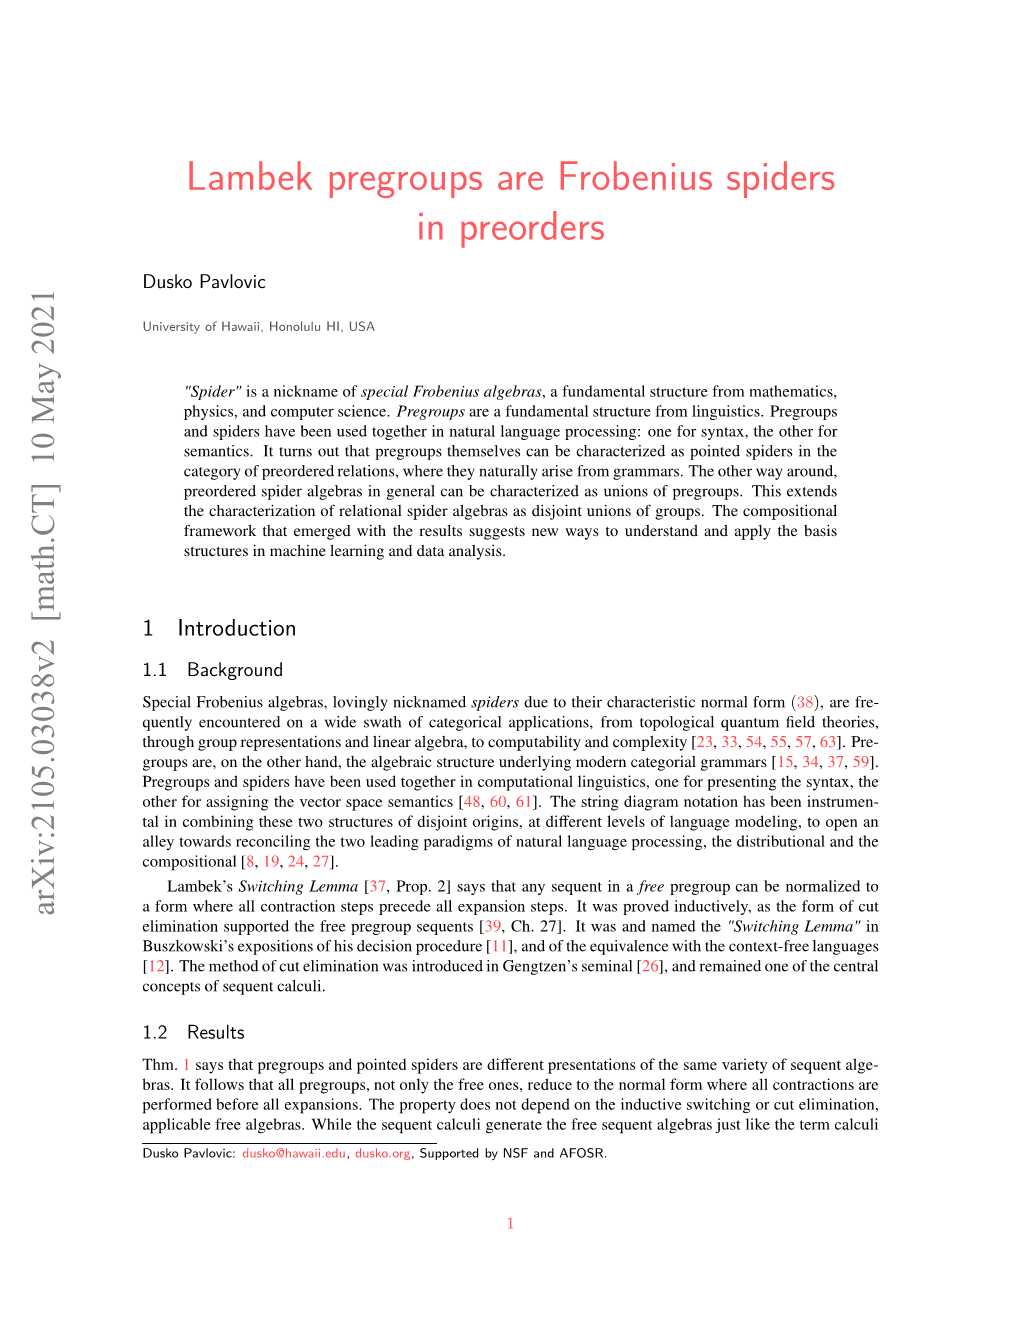 Lambek Pregroups Are Frobenius Spiders in Preorders